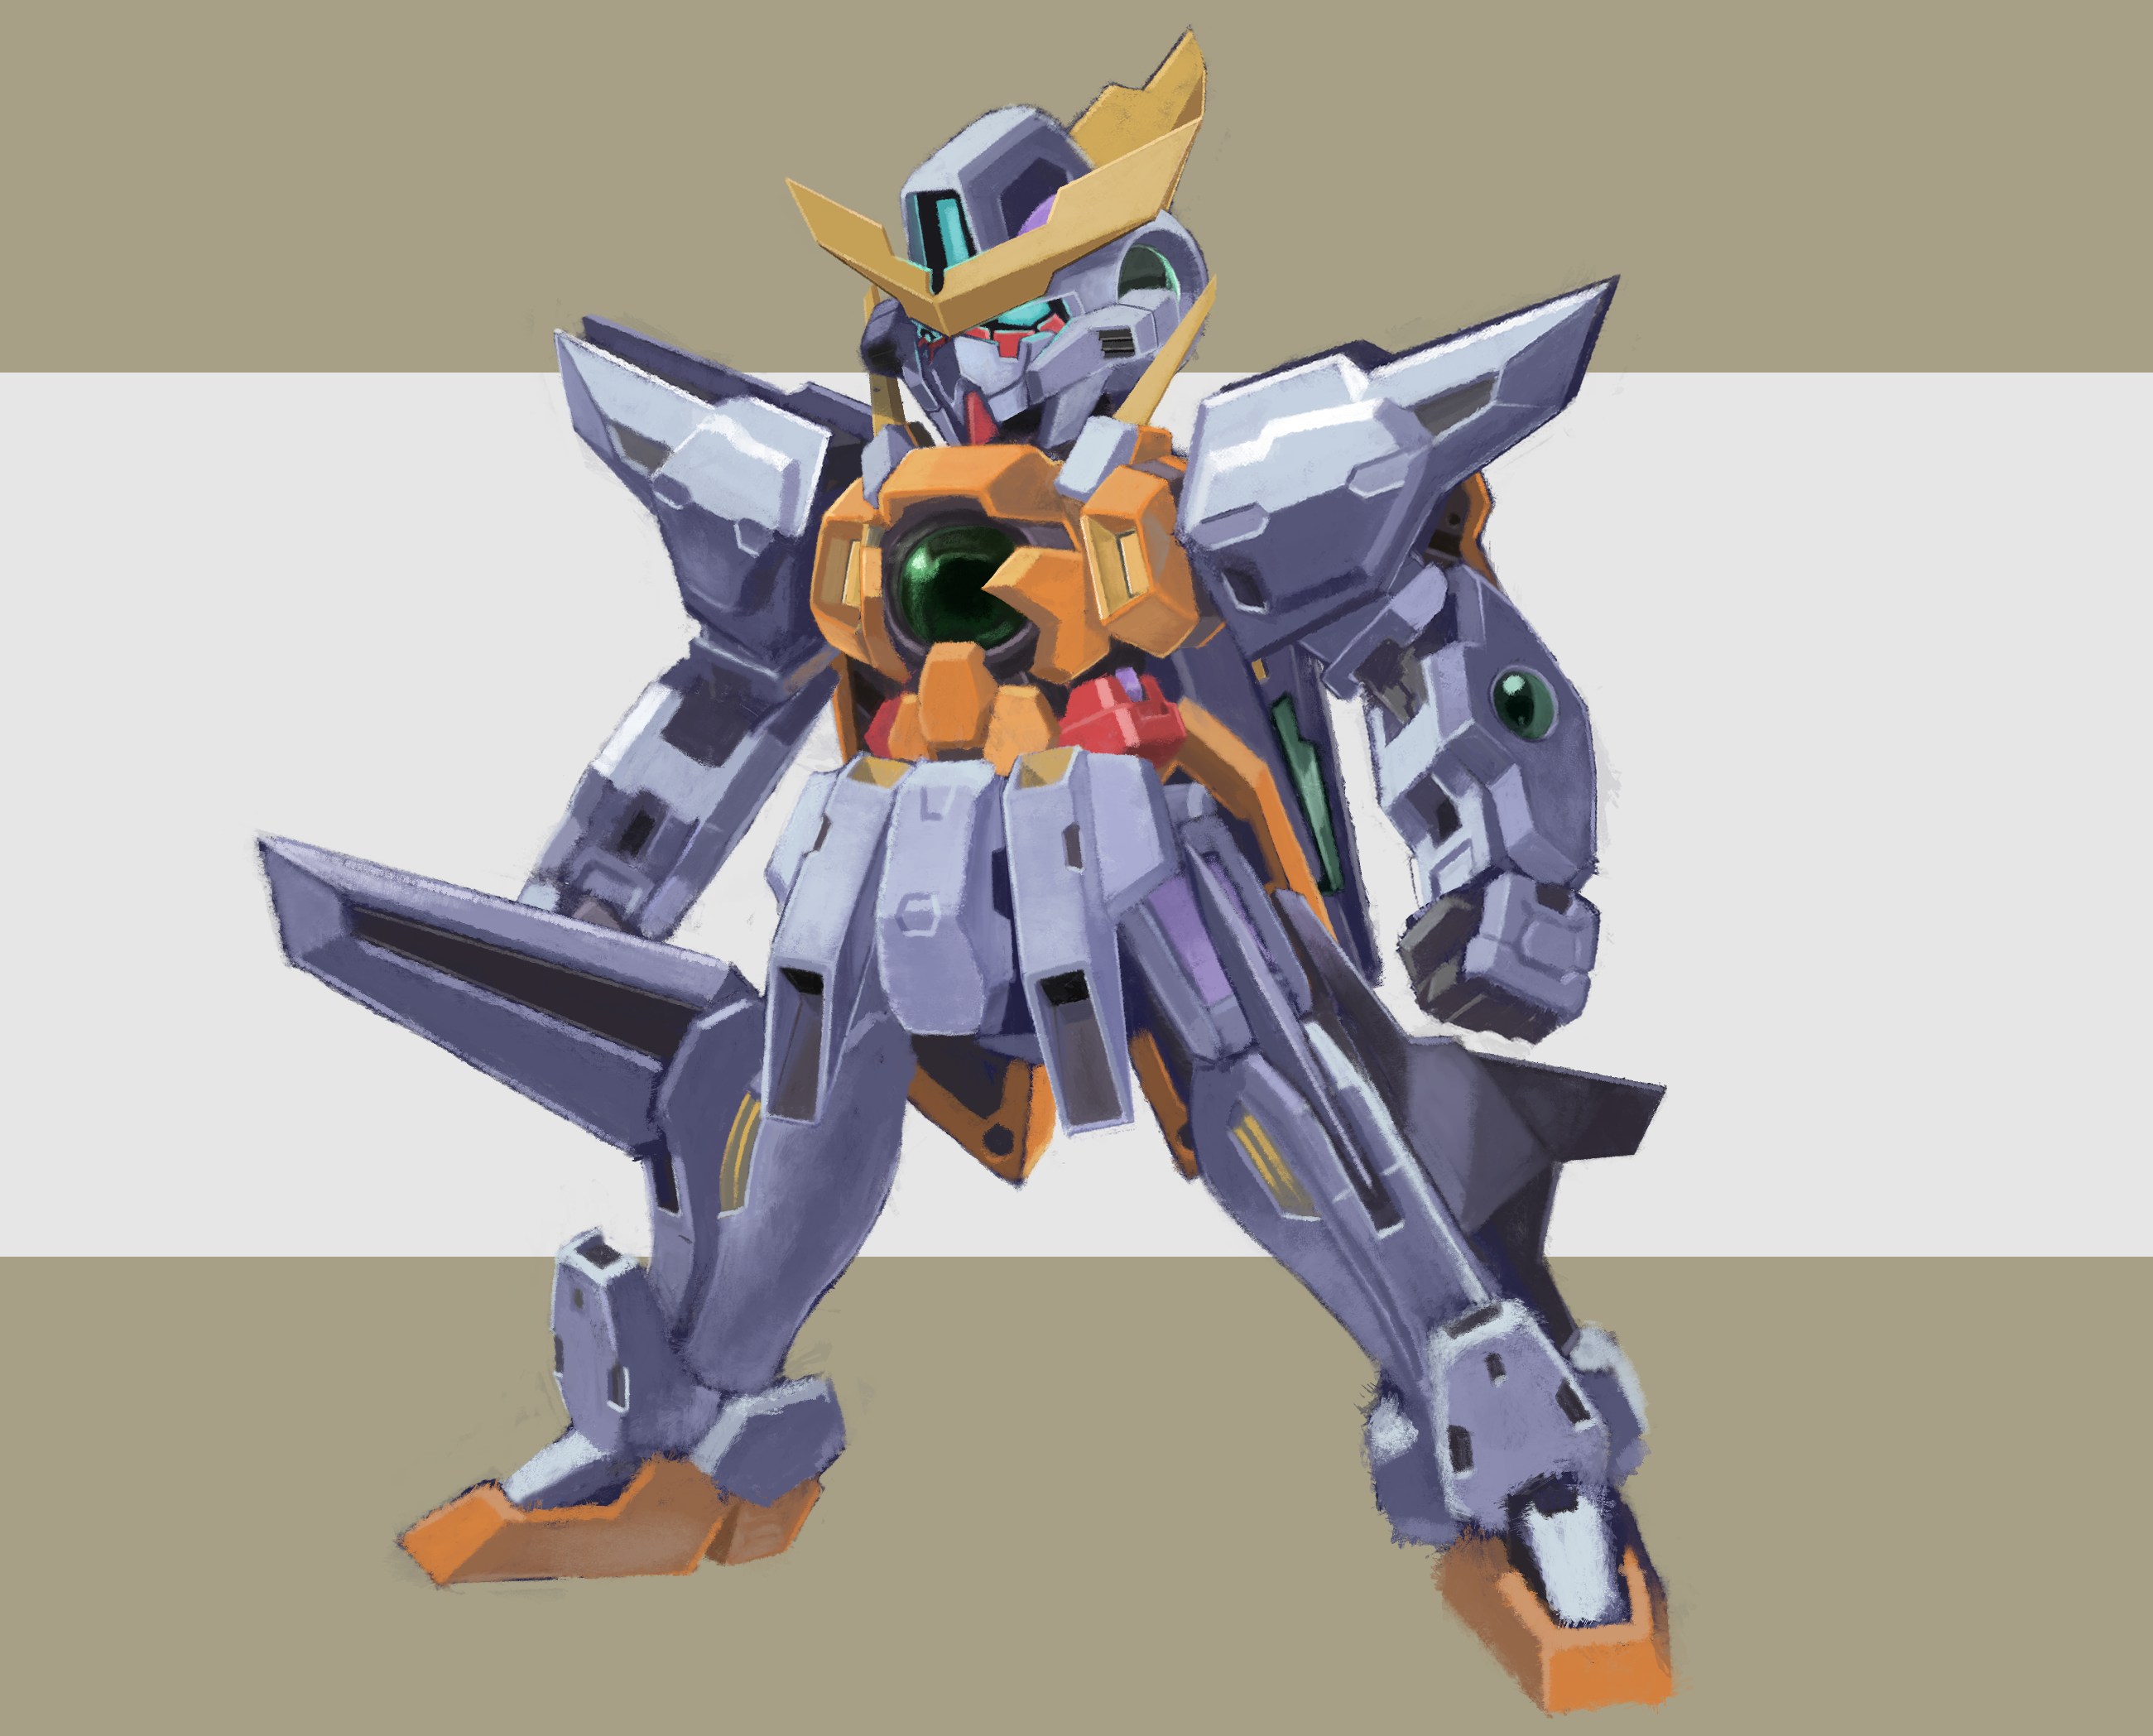 Gundam Kyrios Gundam Mobile Suit Gundam 00 Anime Mechs Super Robot Taisen Artwork Digital Art Fan Ar 2601x2097